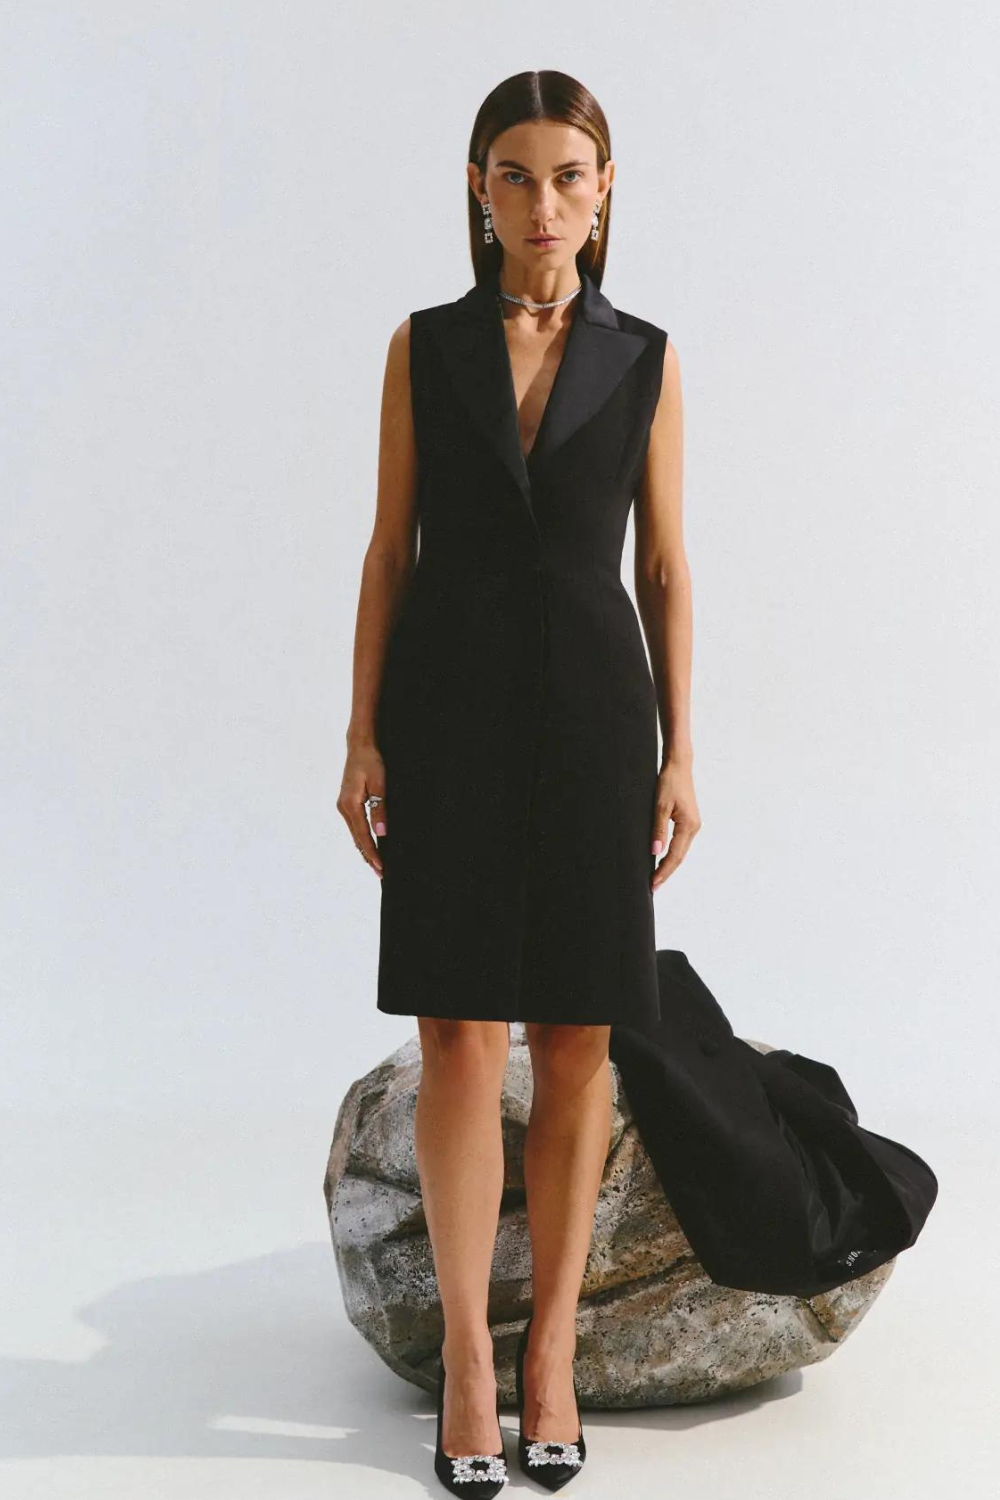 Classic dress with satin collar, black color (Vivons)